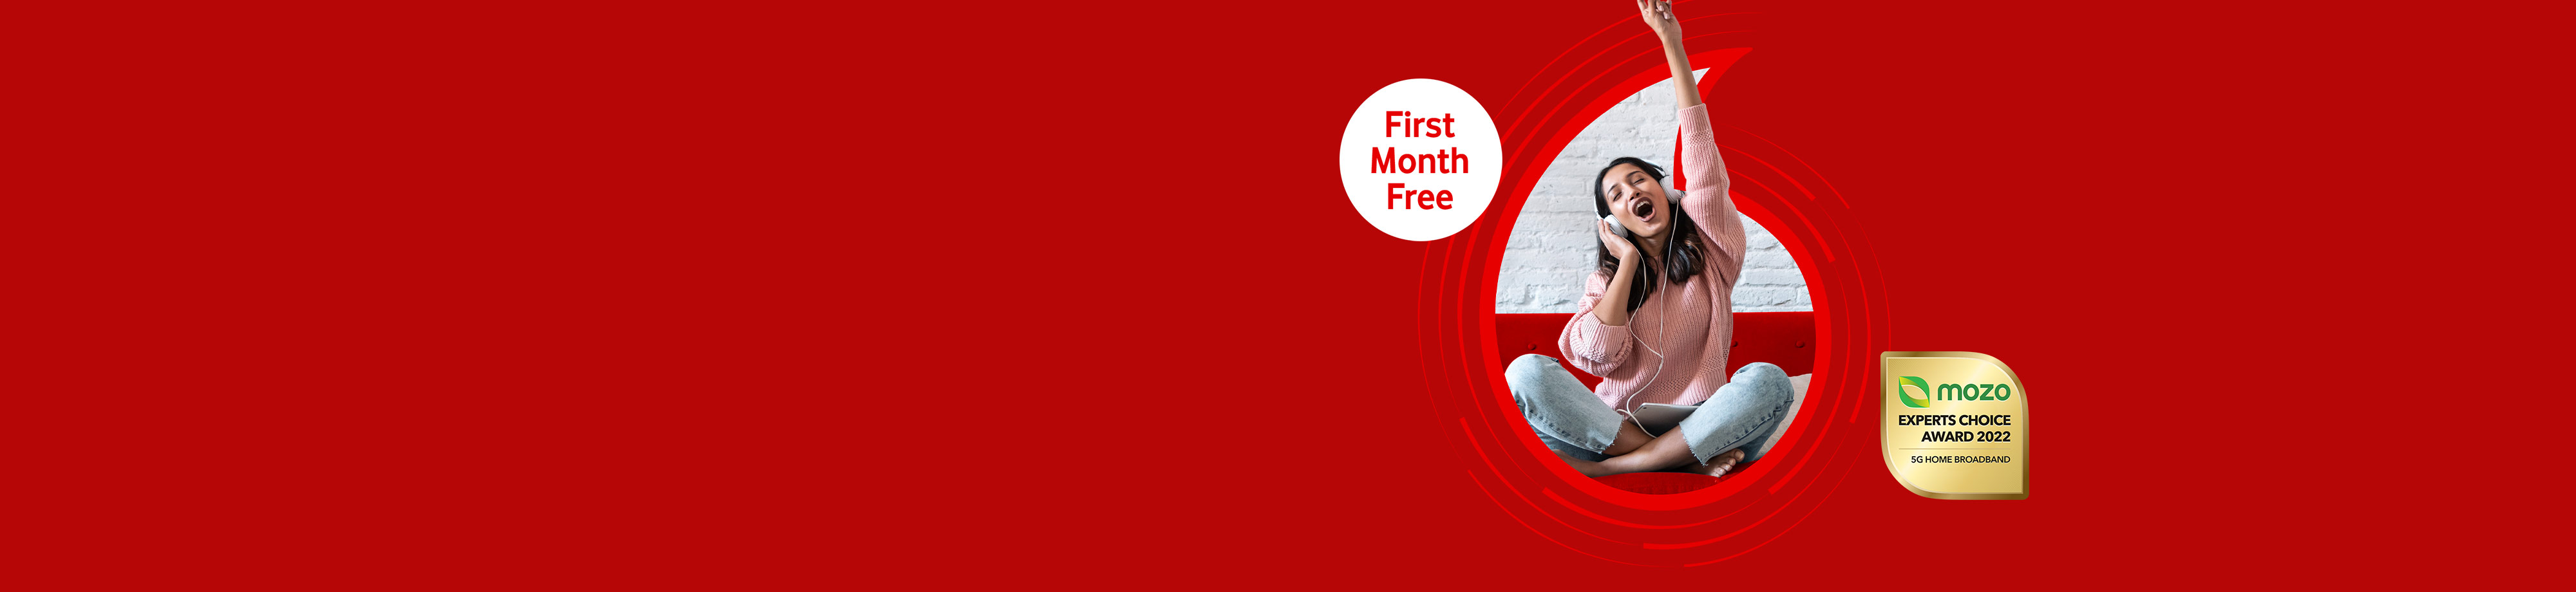 Vodafone nbn & 5g, 4g Home Internet Plans